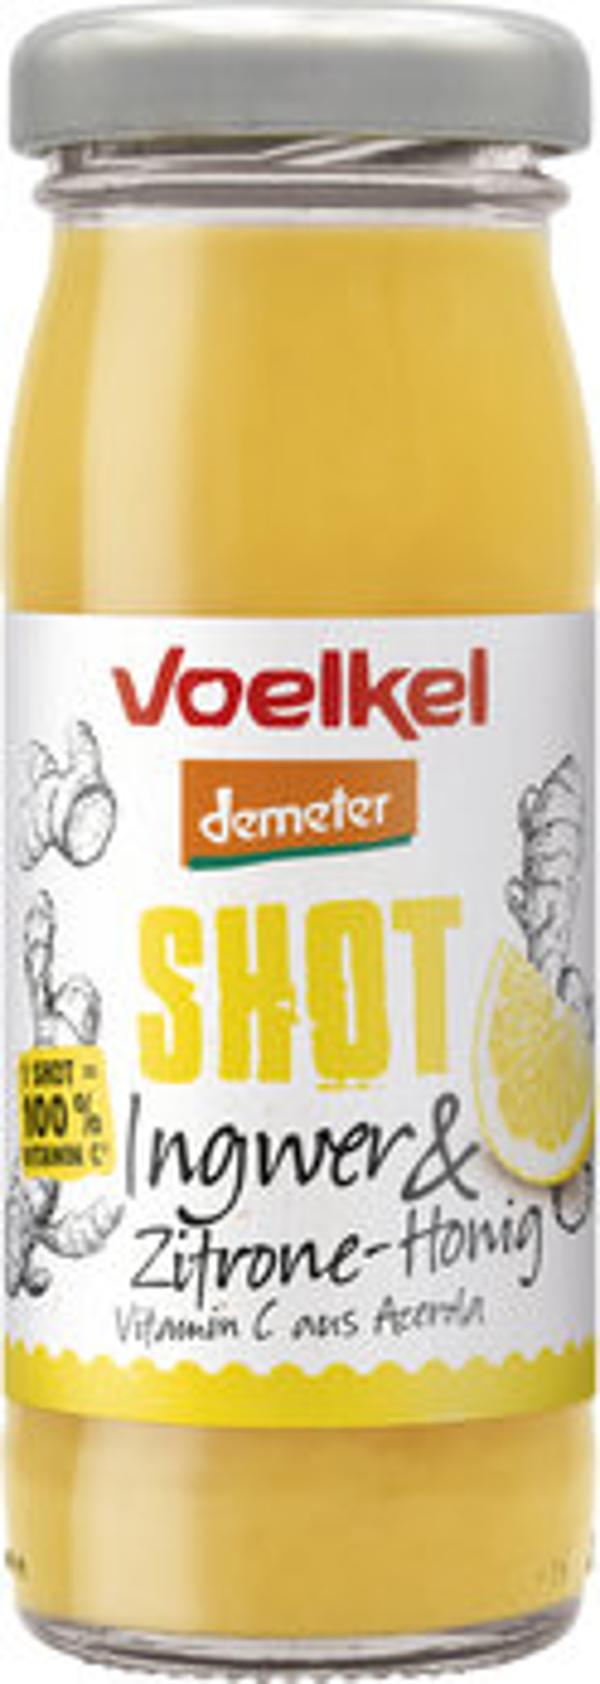 Produktfoto zu Shot Ingwer & Zitrone-Honig 95ml